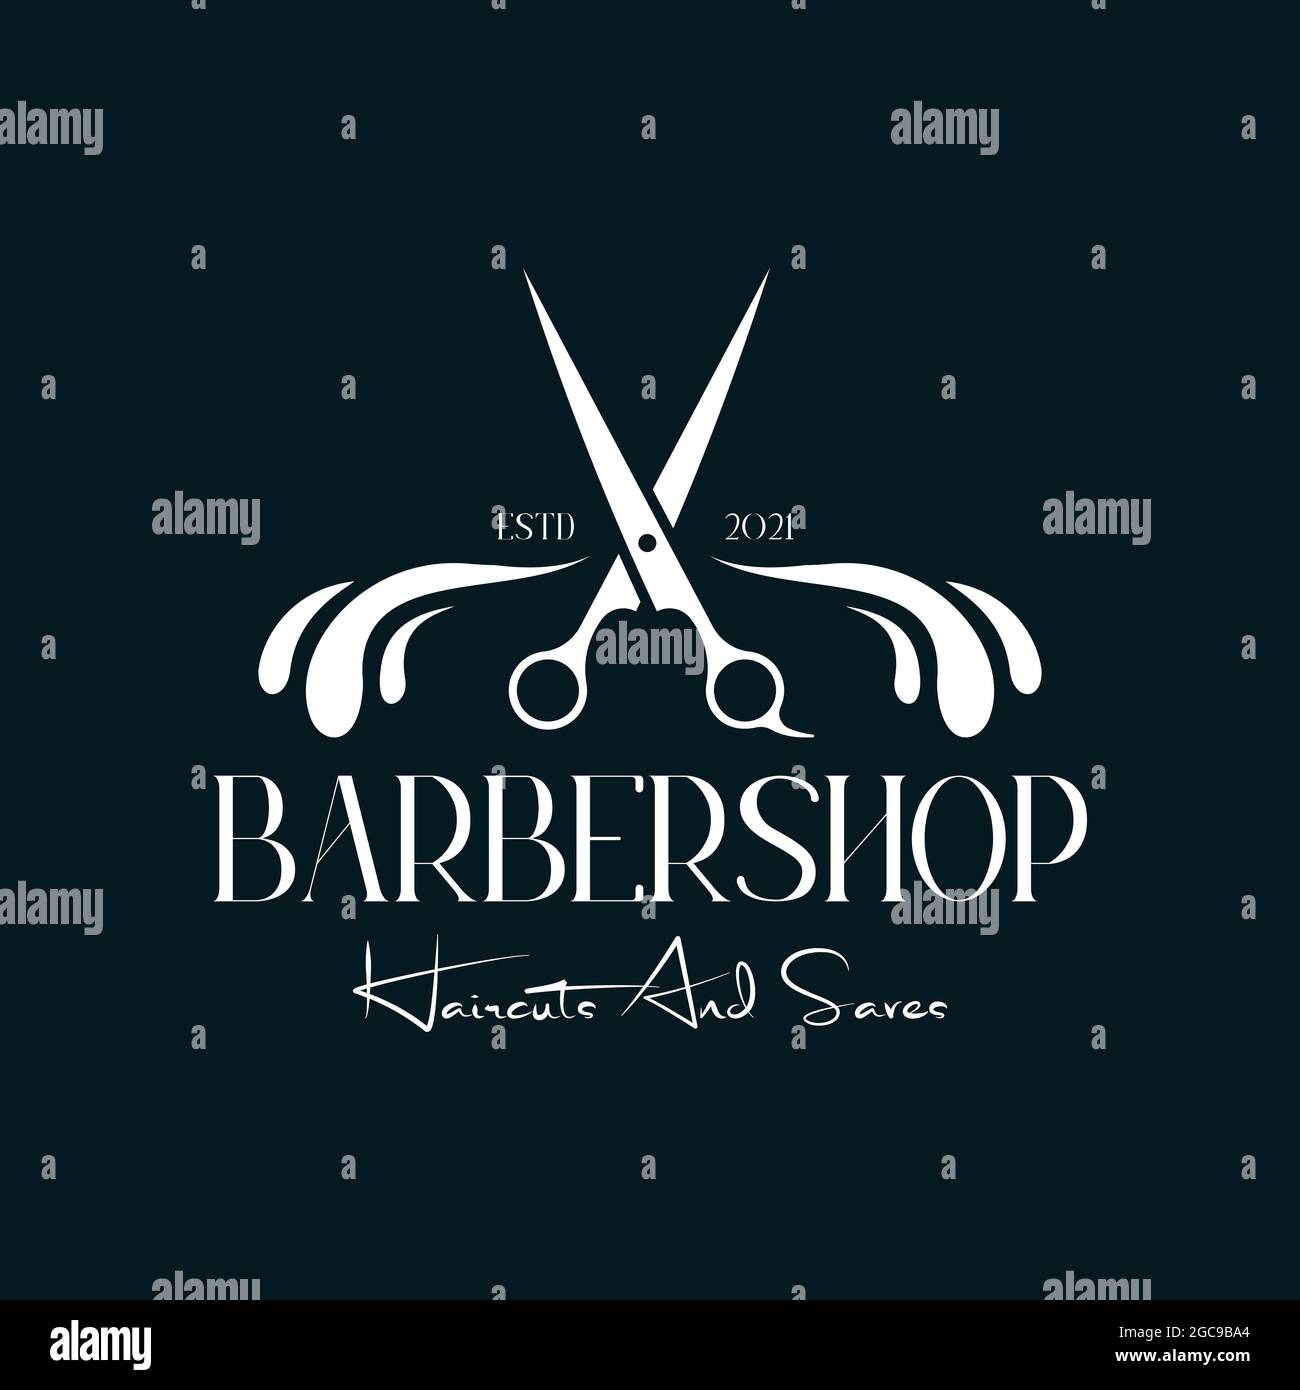 Barbershop Haircuts And Saves Logo Design Vector Template Stock Vector